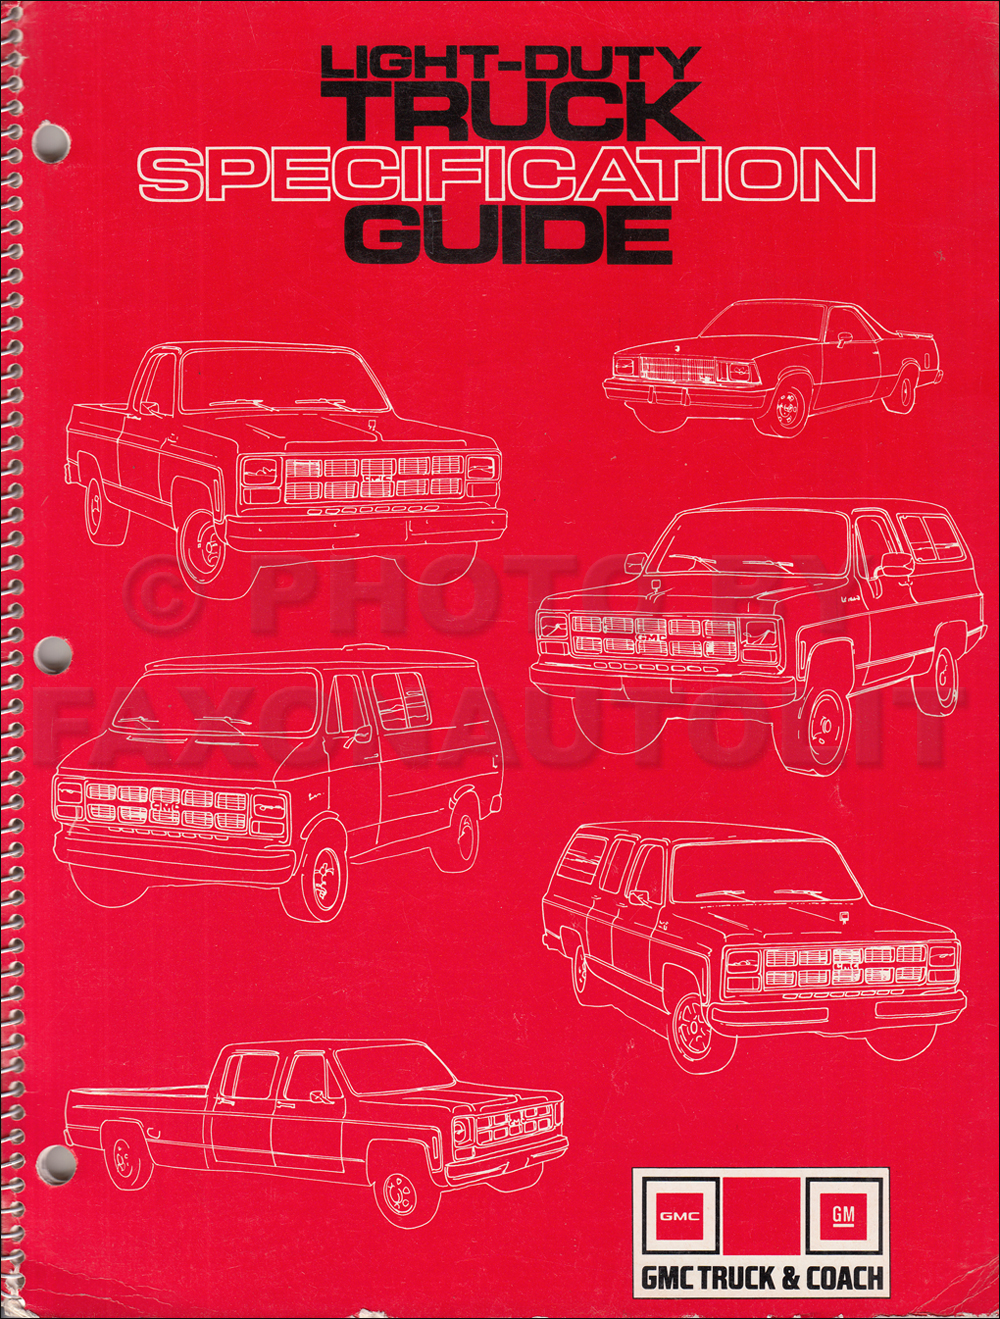 1980 GMC Specifications Guide Competitive Comparison Dealer Album Original